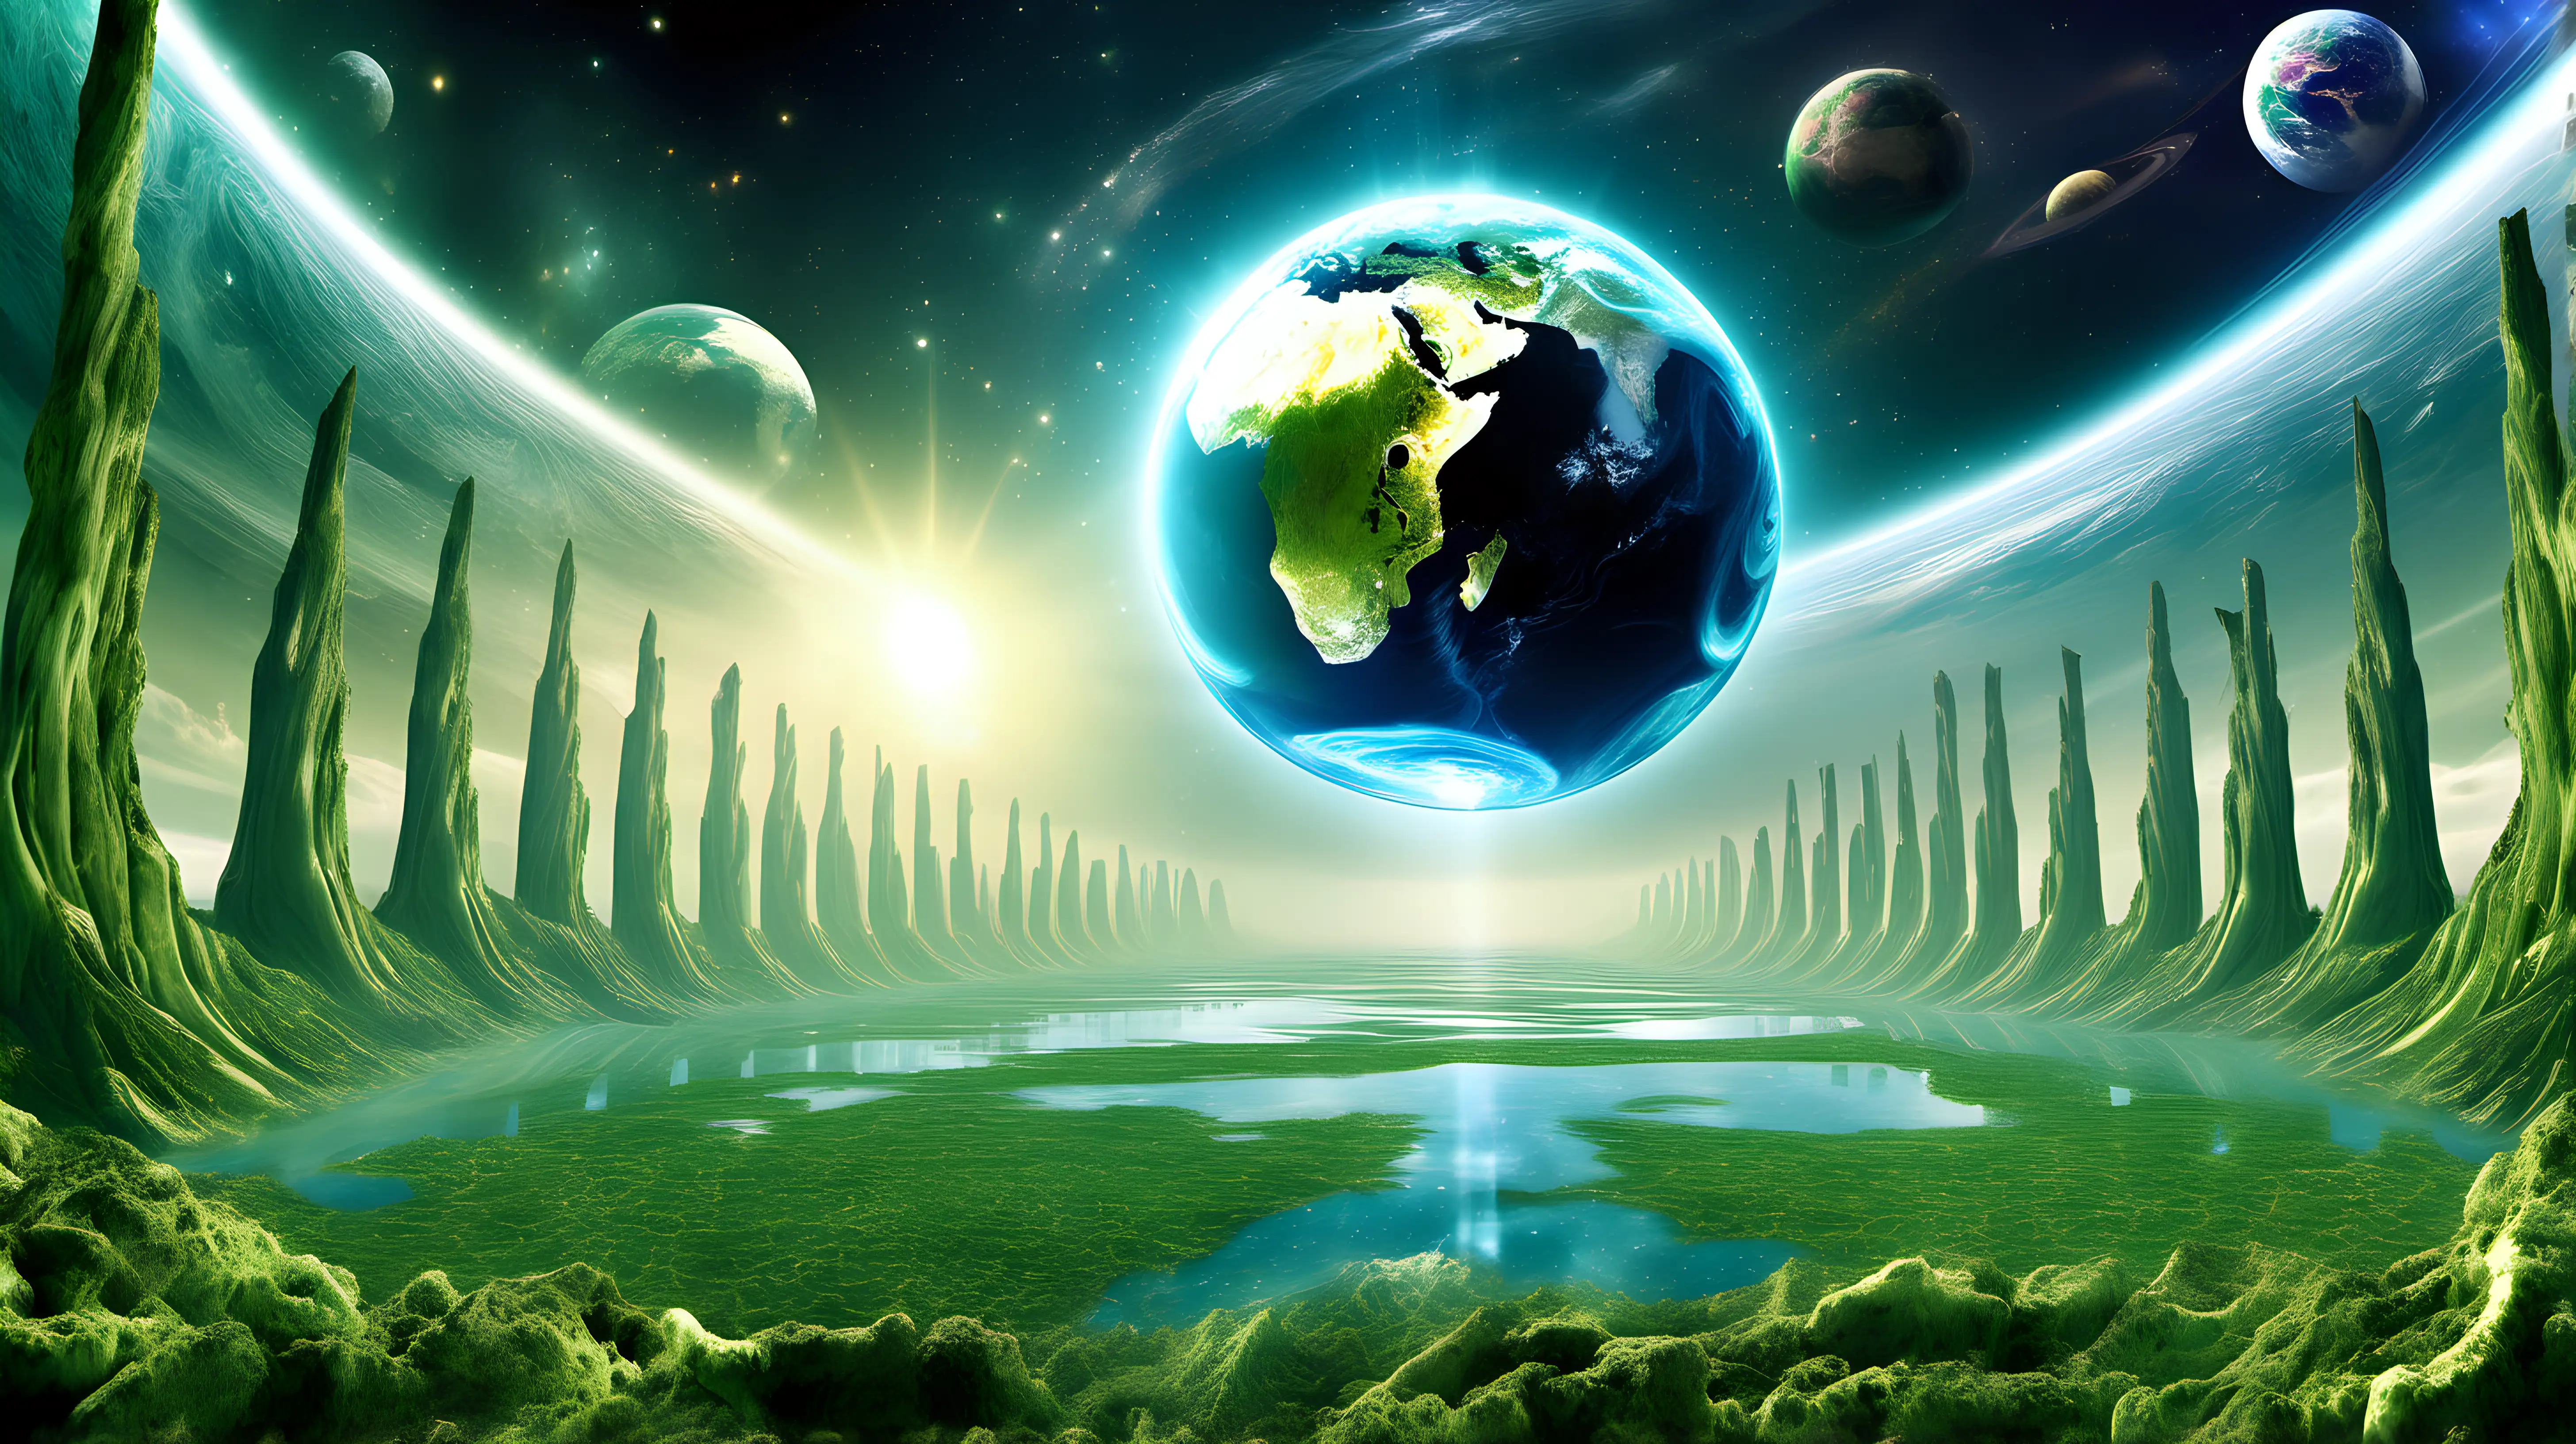 Interstellar Council Debates Earths Environmental Record on Earth Day